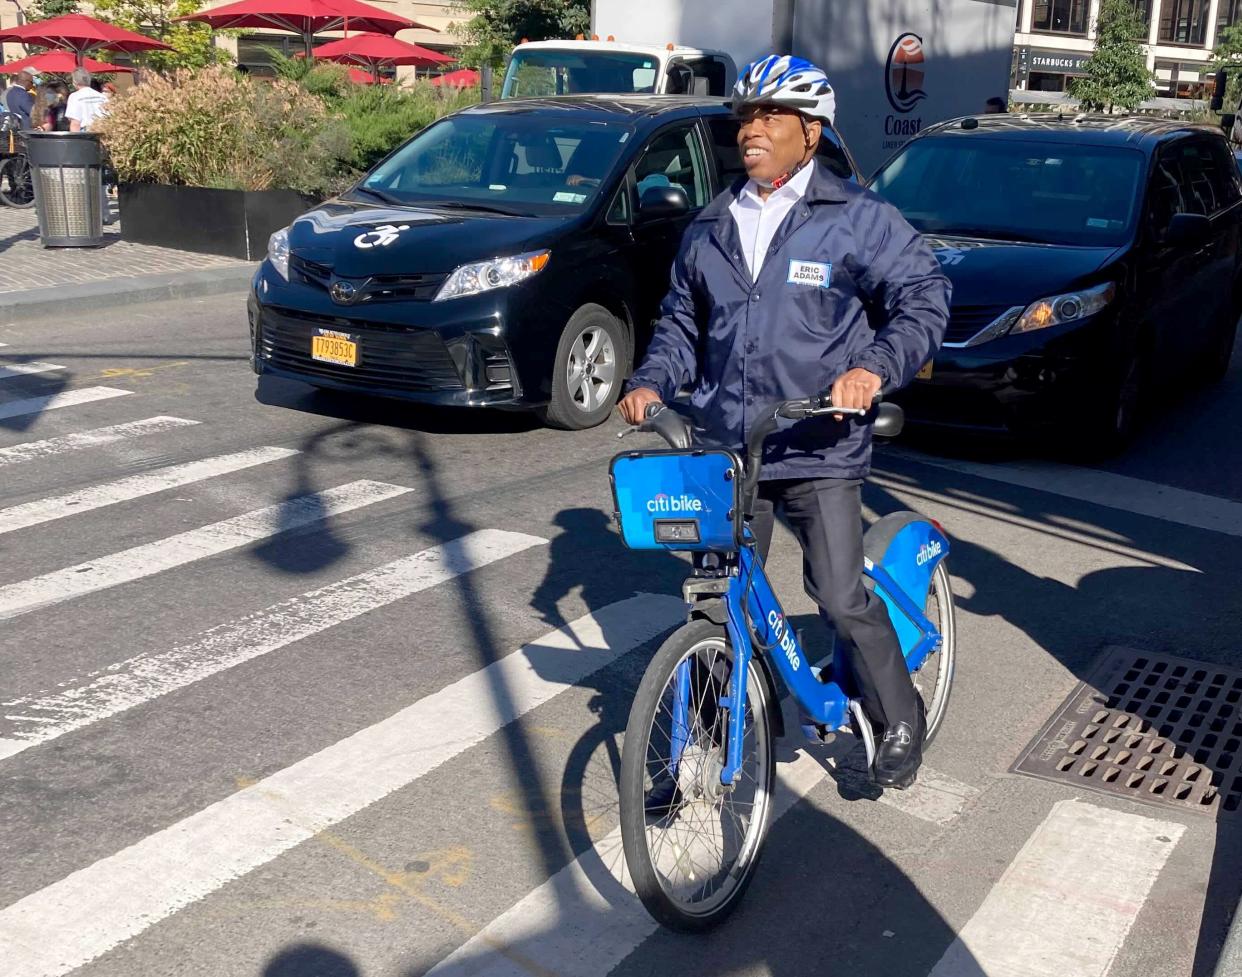 Democratic New York City mayoral candidate Eric Adams bikes in Greenwich Village in Manhattan, New York on Tuesday, Oct. 19, 2021.